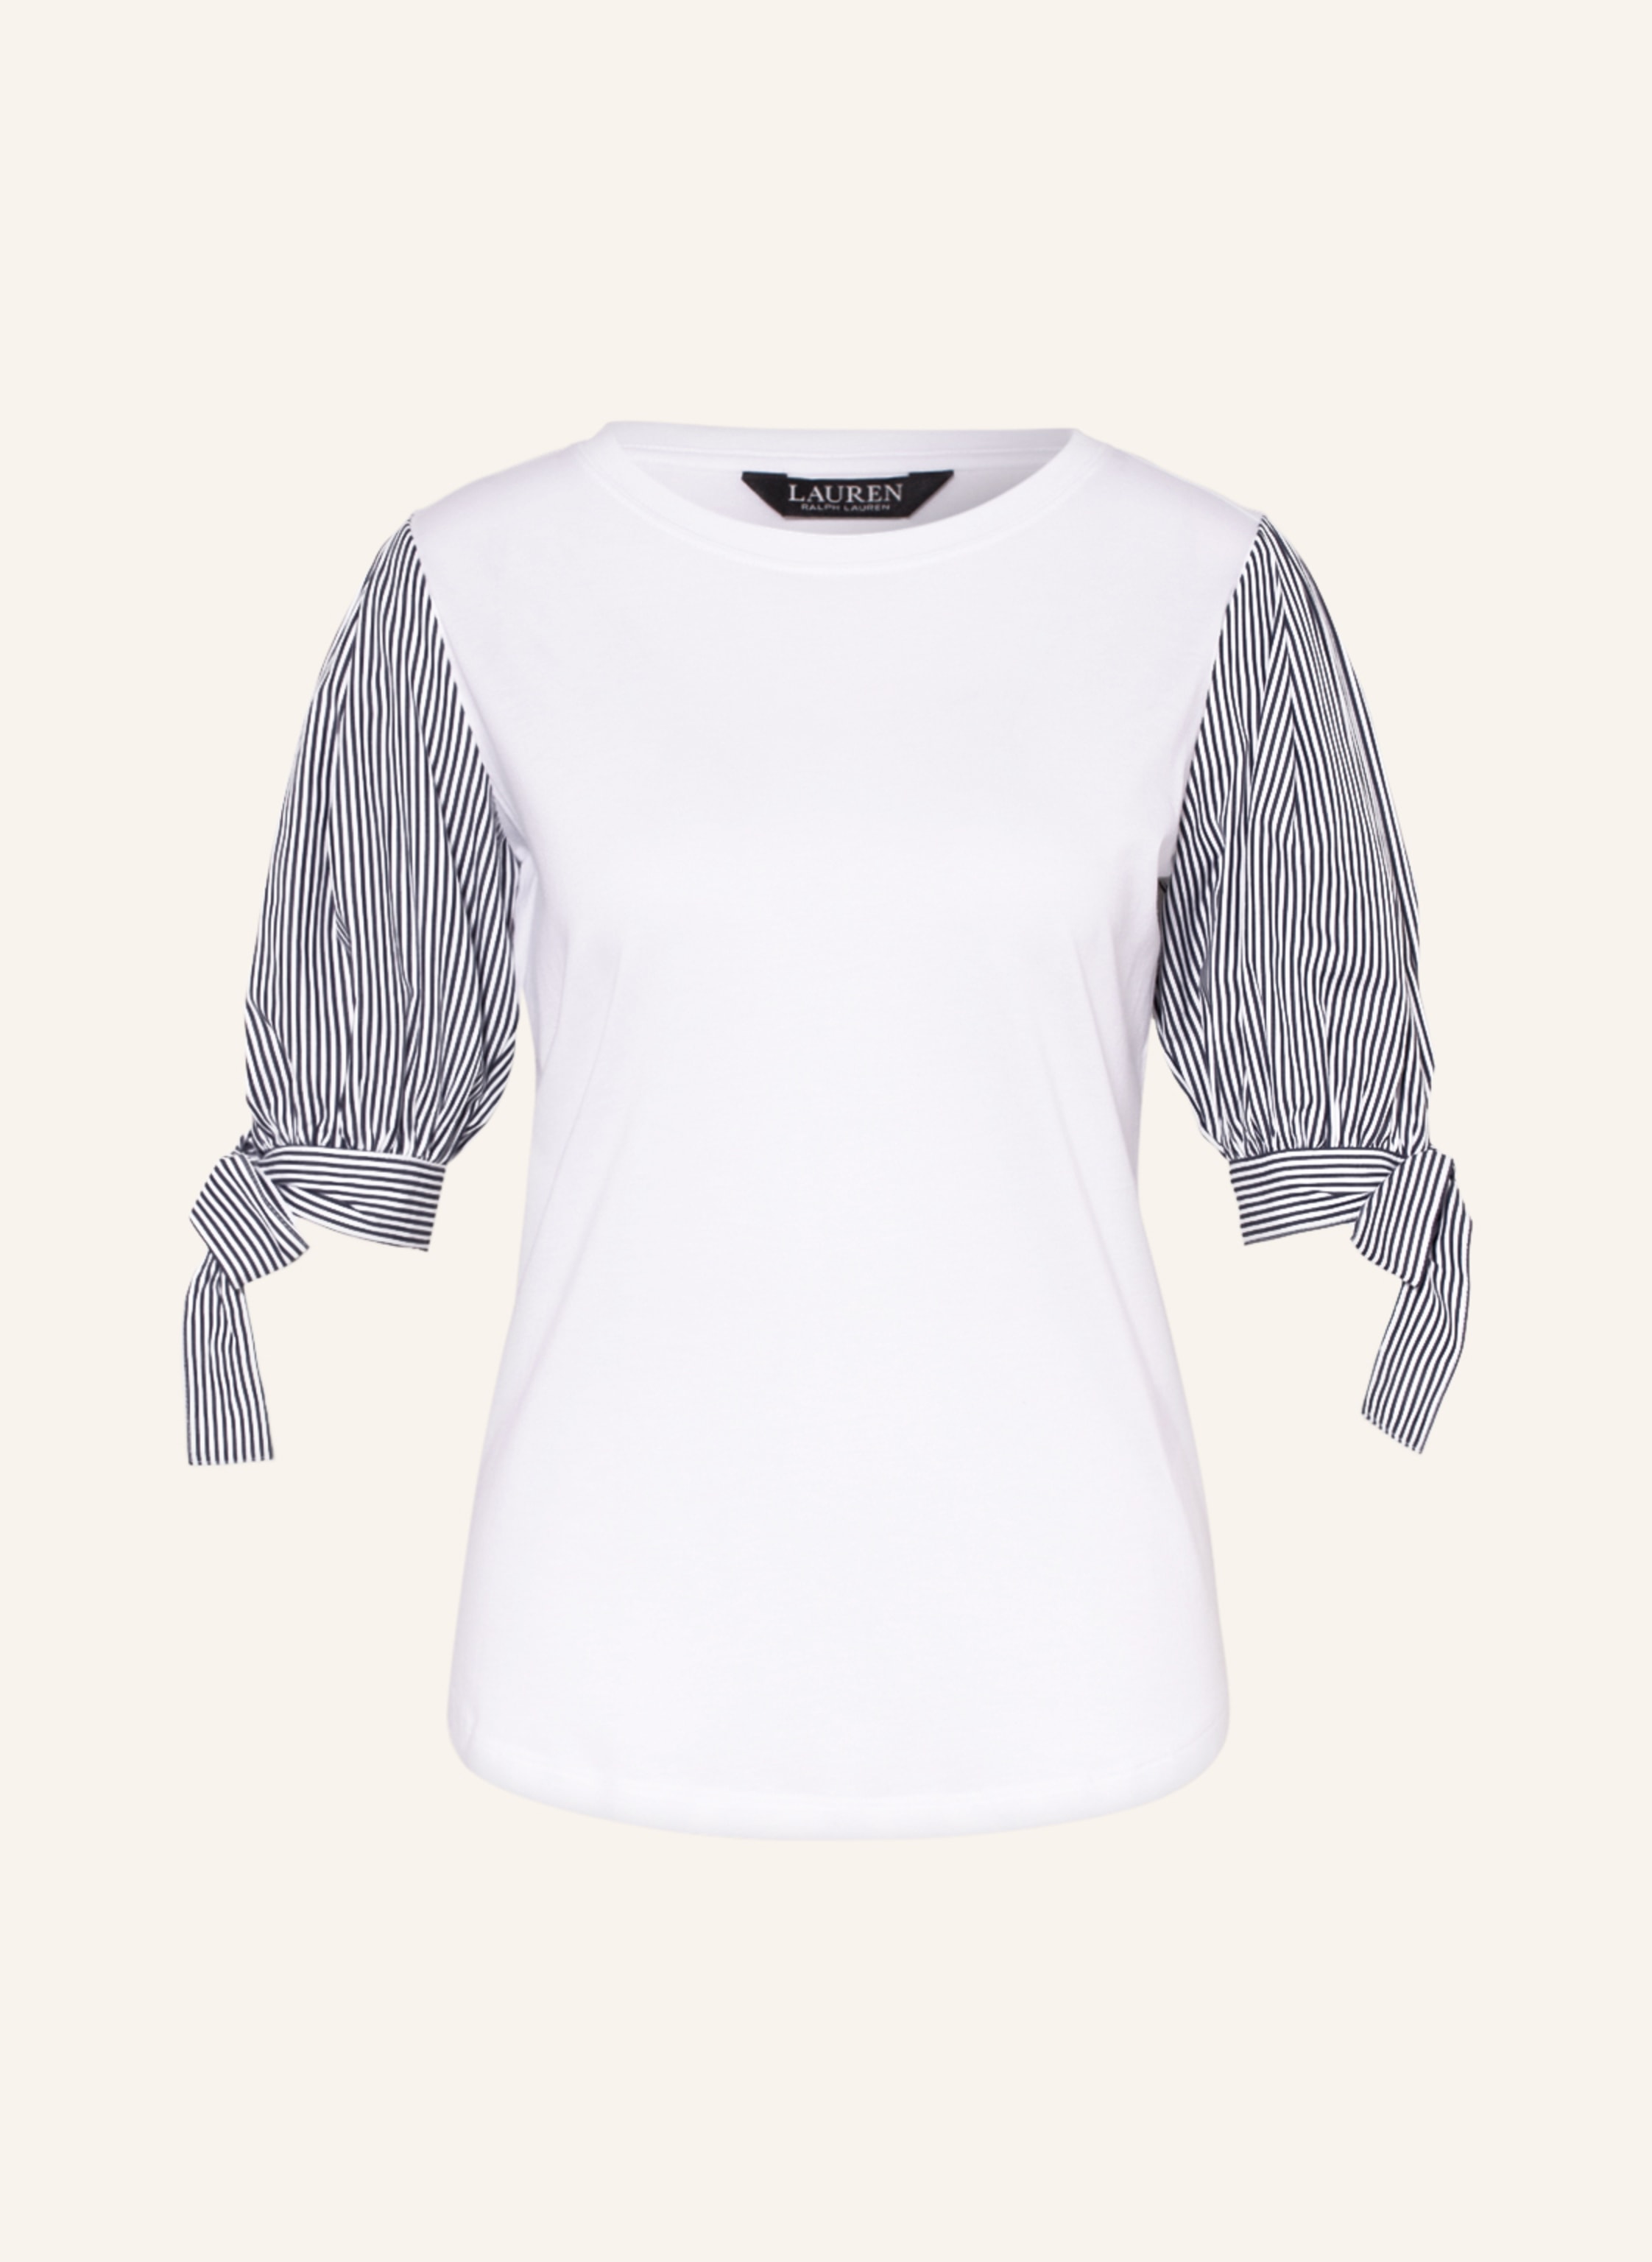 LAUREN RALPH LAUREN Shirt blouse in mixed materials with 3/4 sleeves in  white/ dark gray | Breuninger